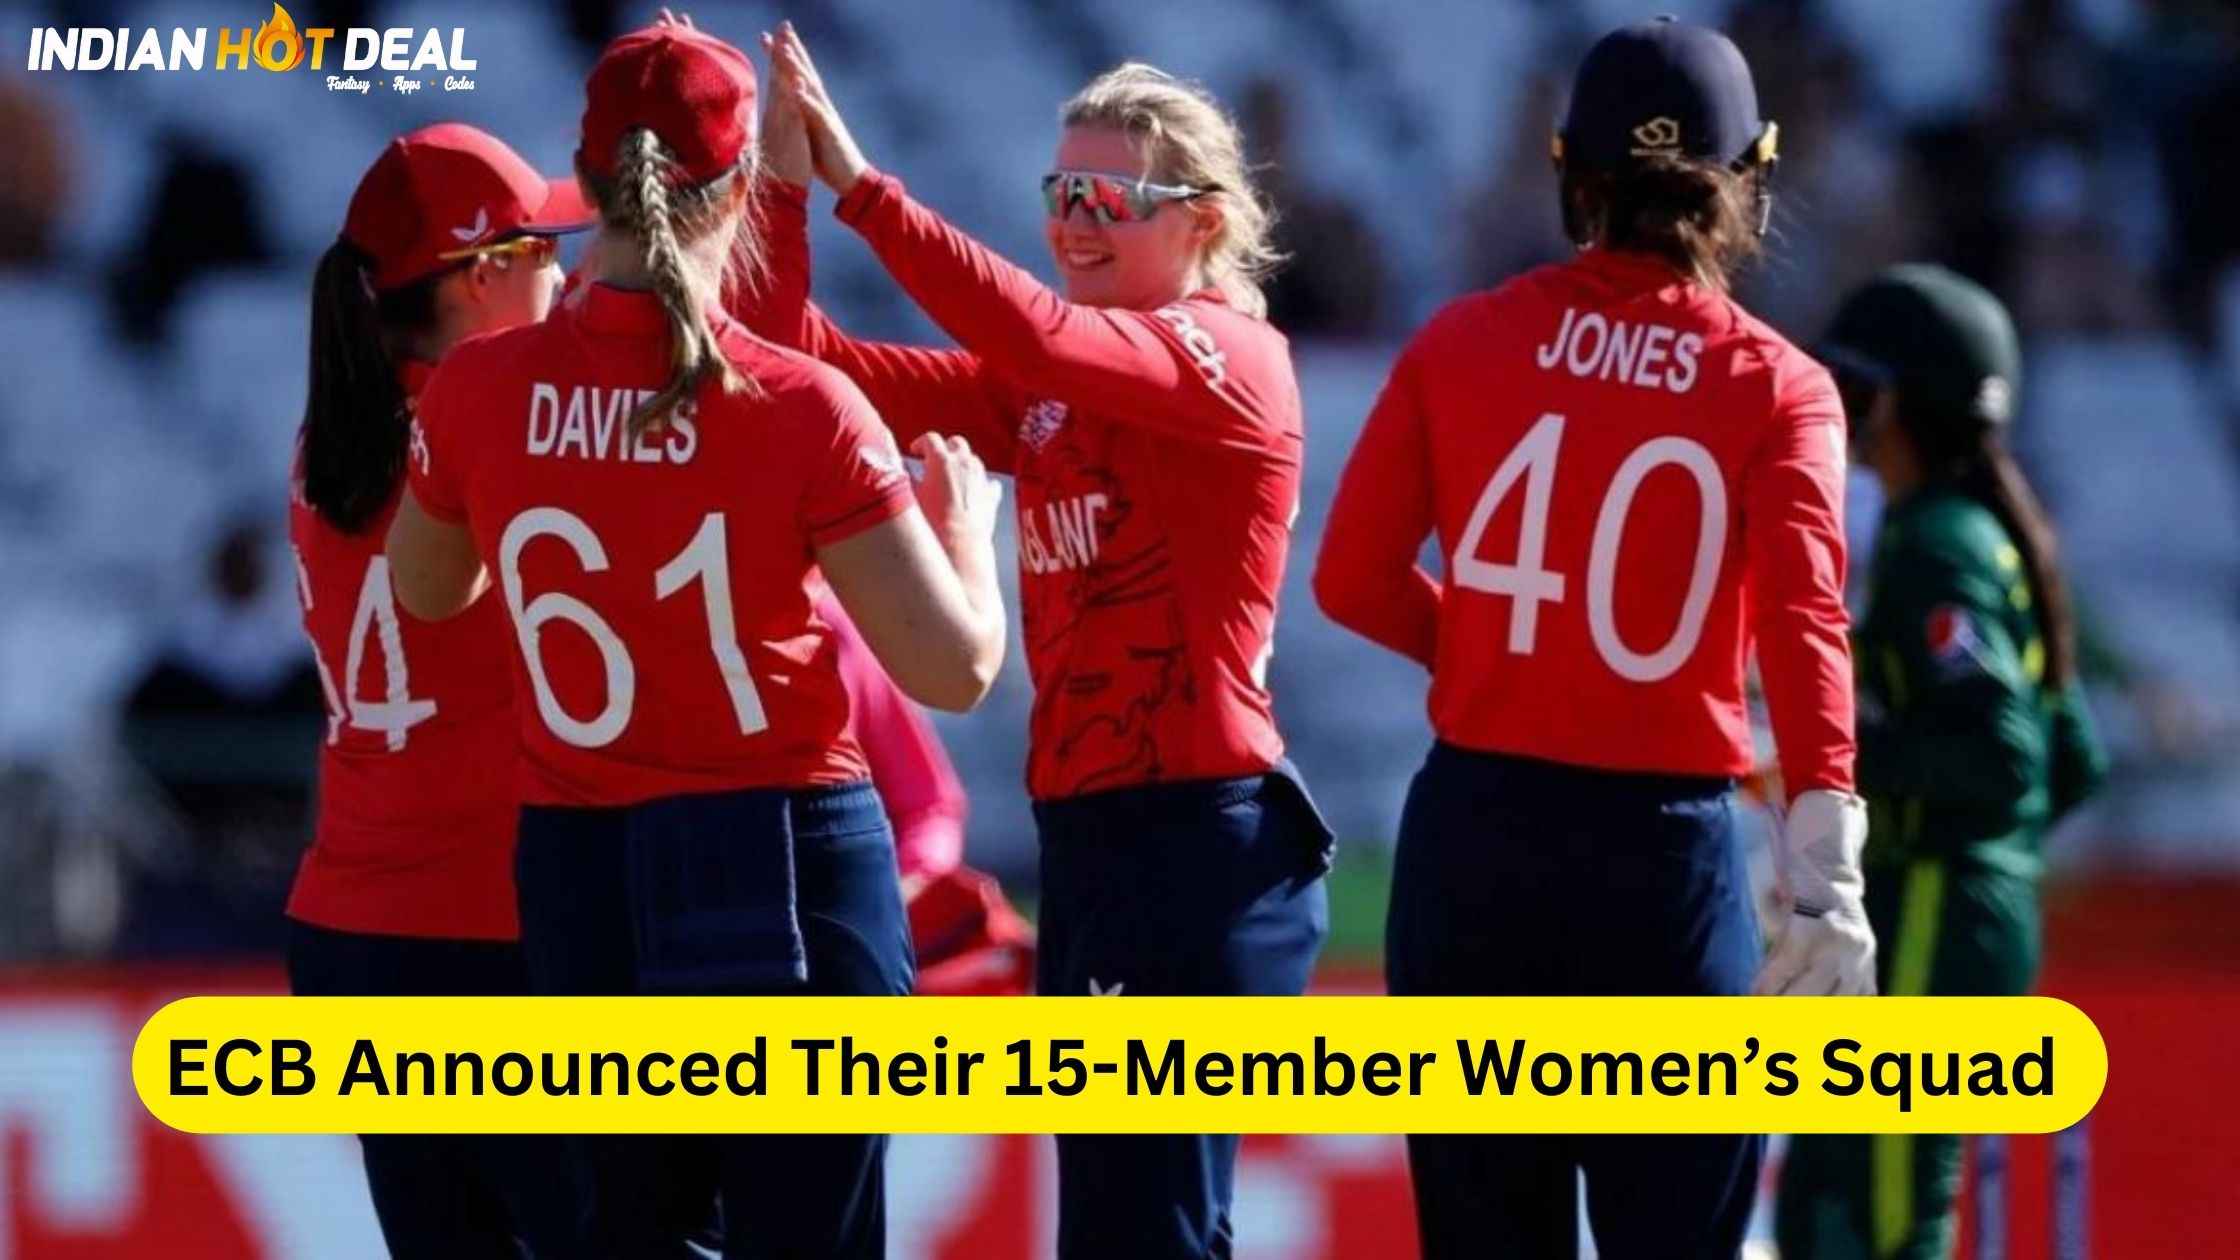 ECB Announced Their 15-Member Women’s Squad Ahead of The White-Ball Series Against Sri Lanka